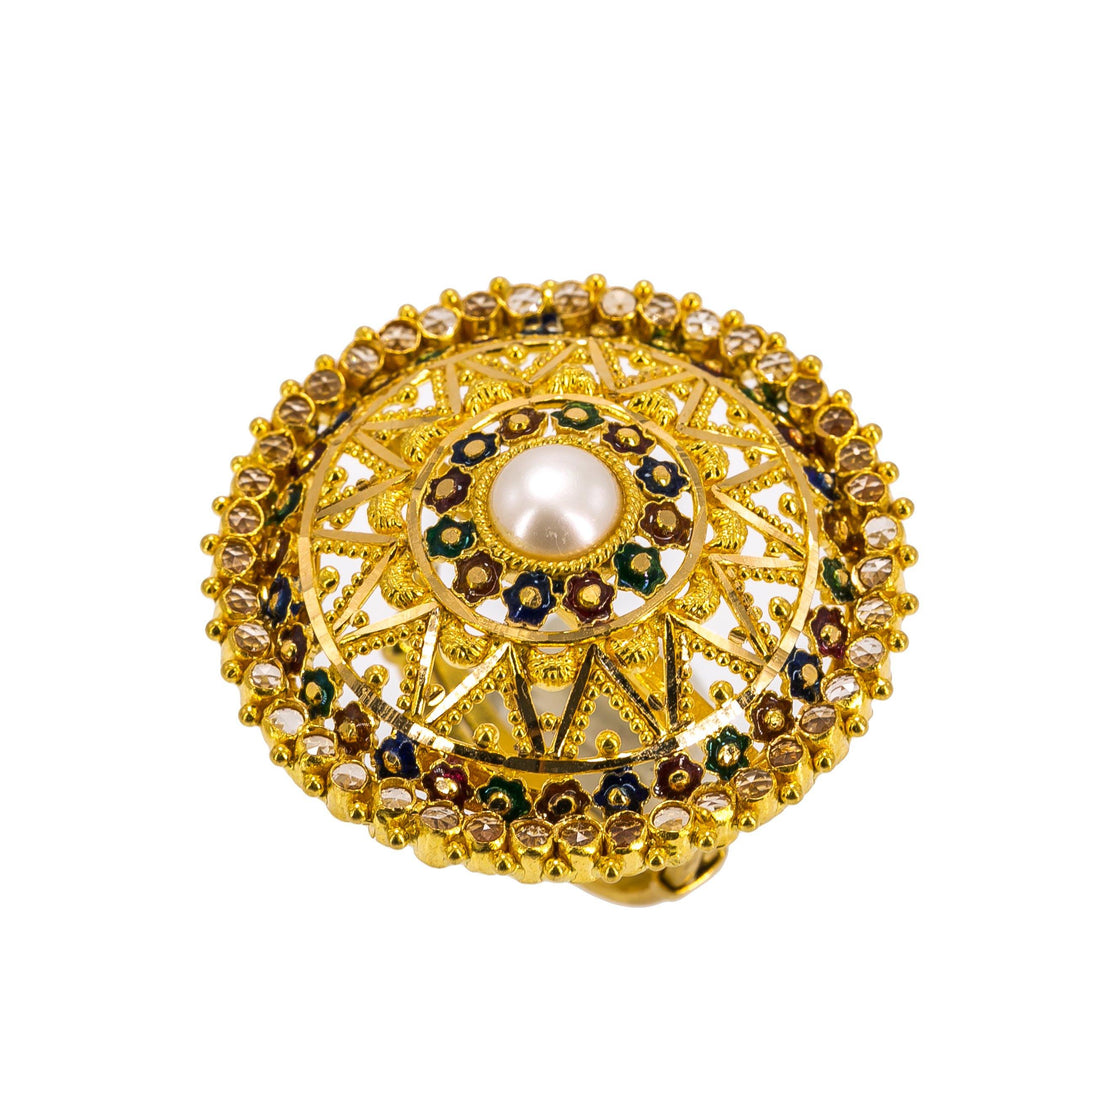 Buy Shree Mauli Creation Golden Alloy Golden Round Jelebi Shape Ring for  Women SMCR56 at Amazon.in